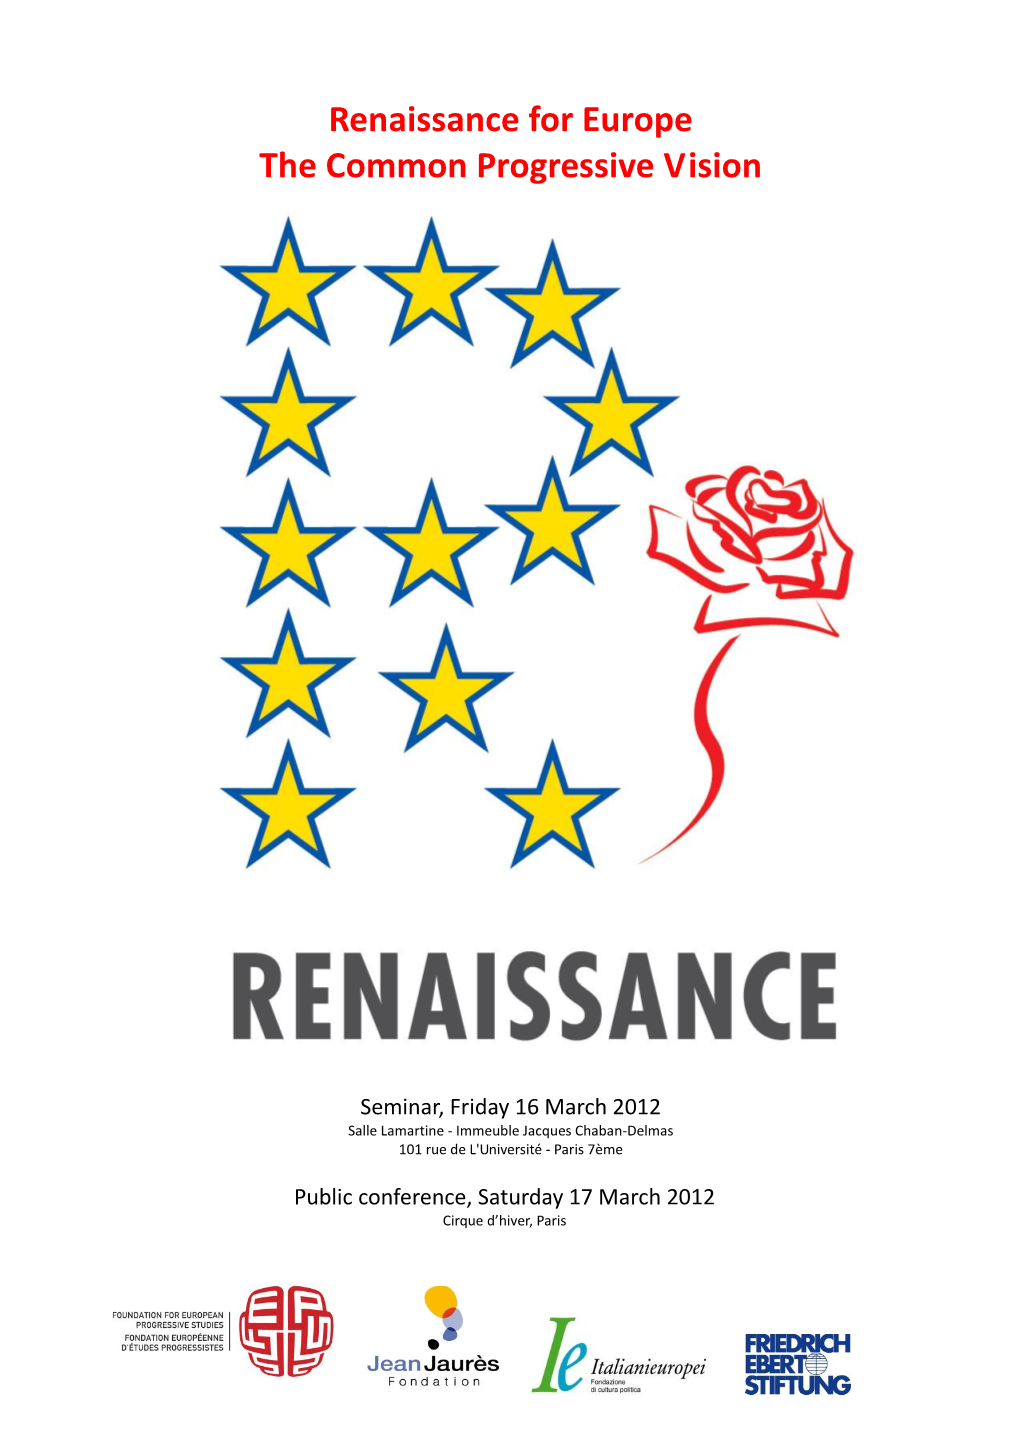 Renaissance for Europe the Common Progressive Vision